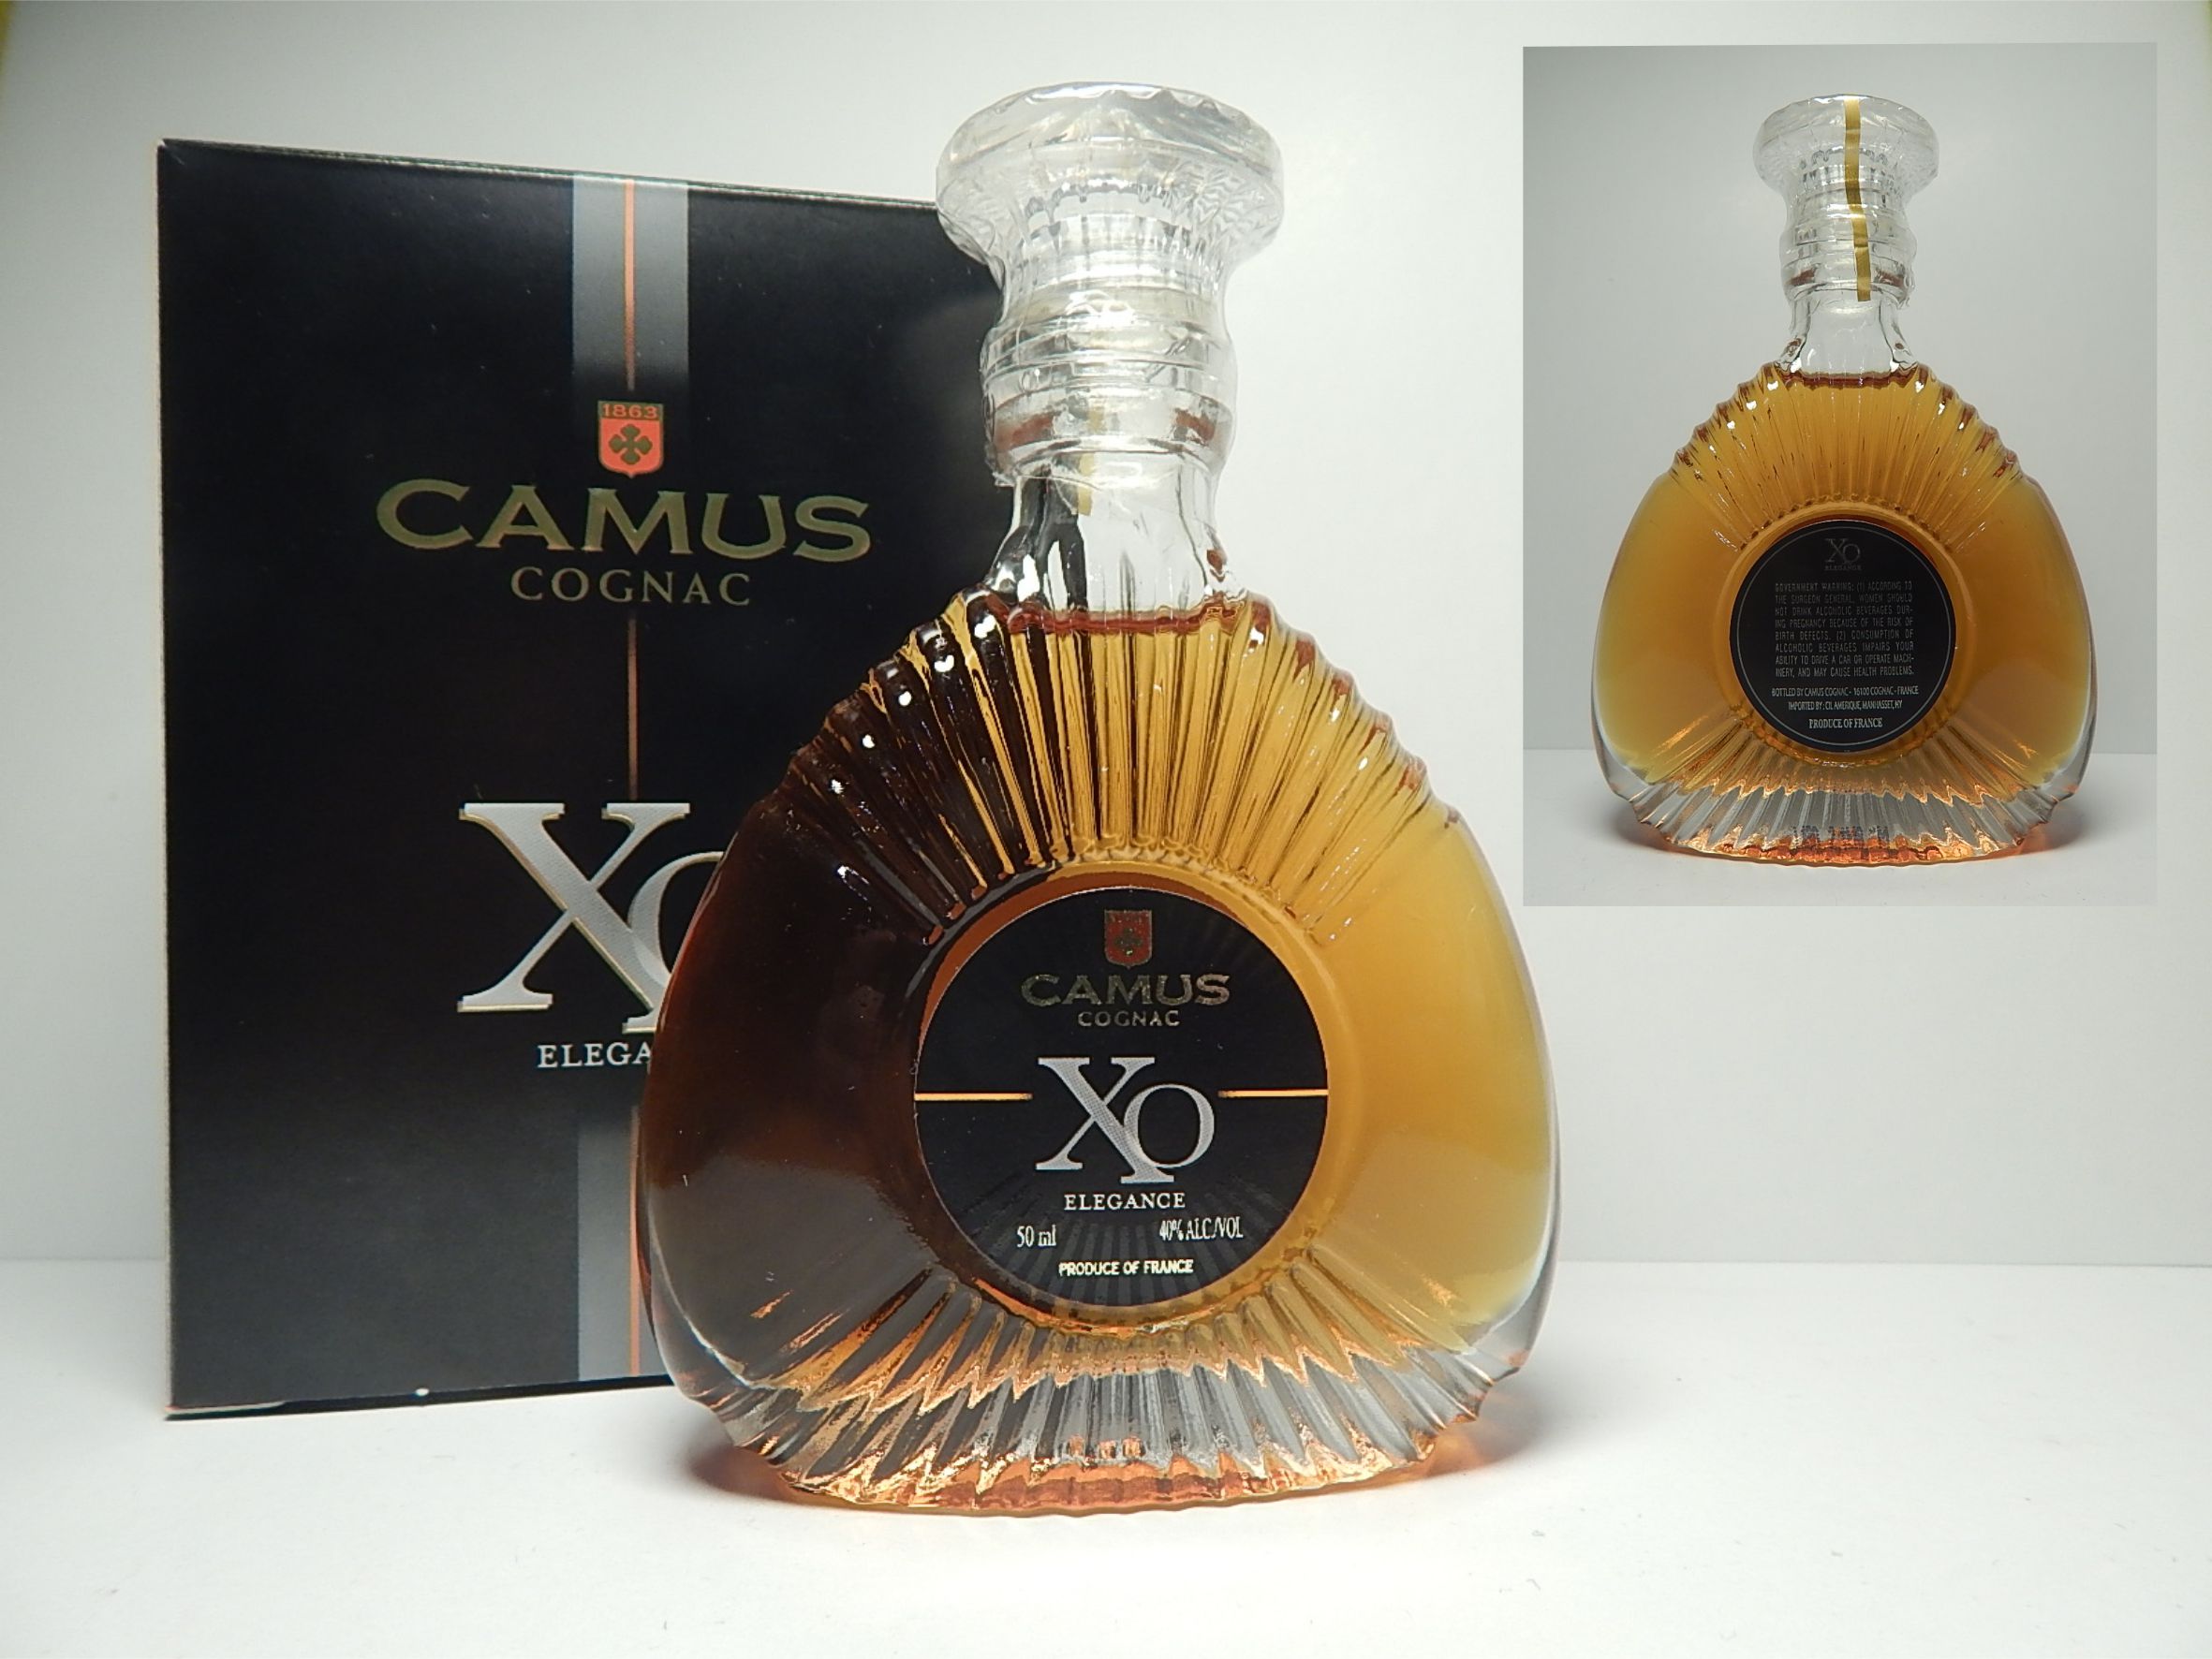 XO Elegance Cognac